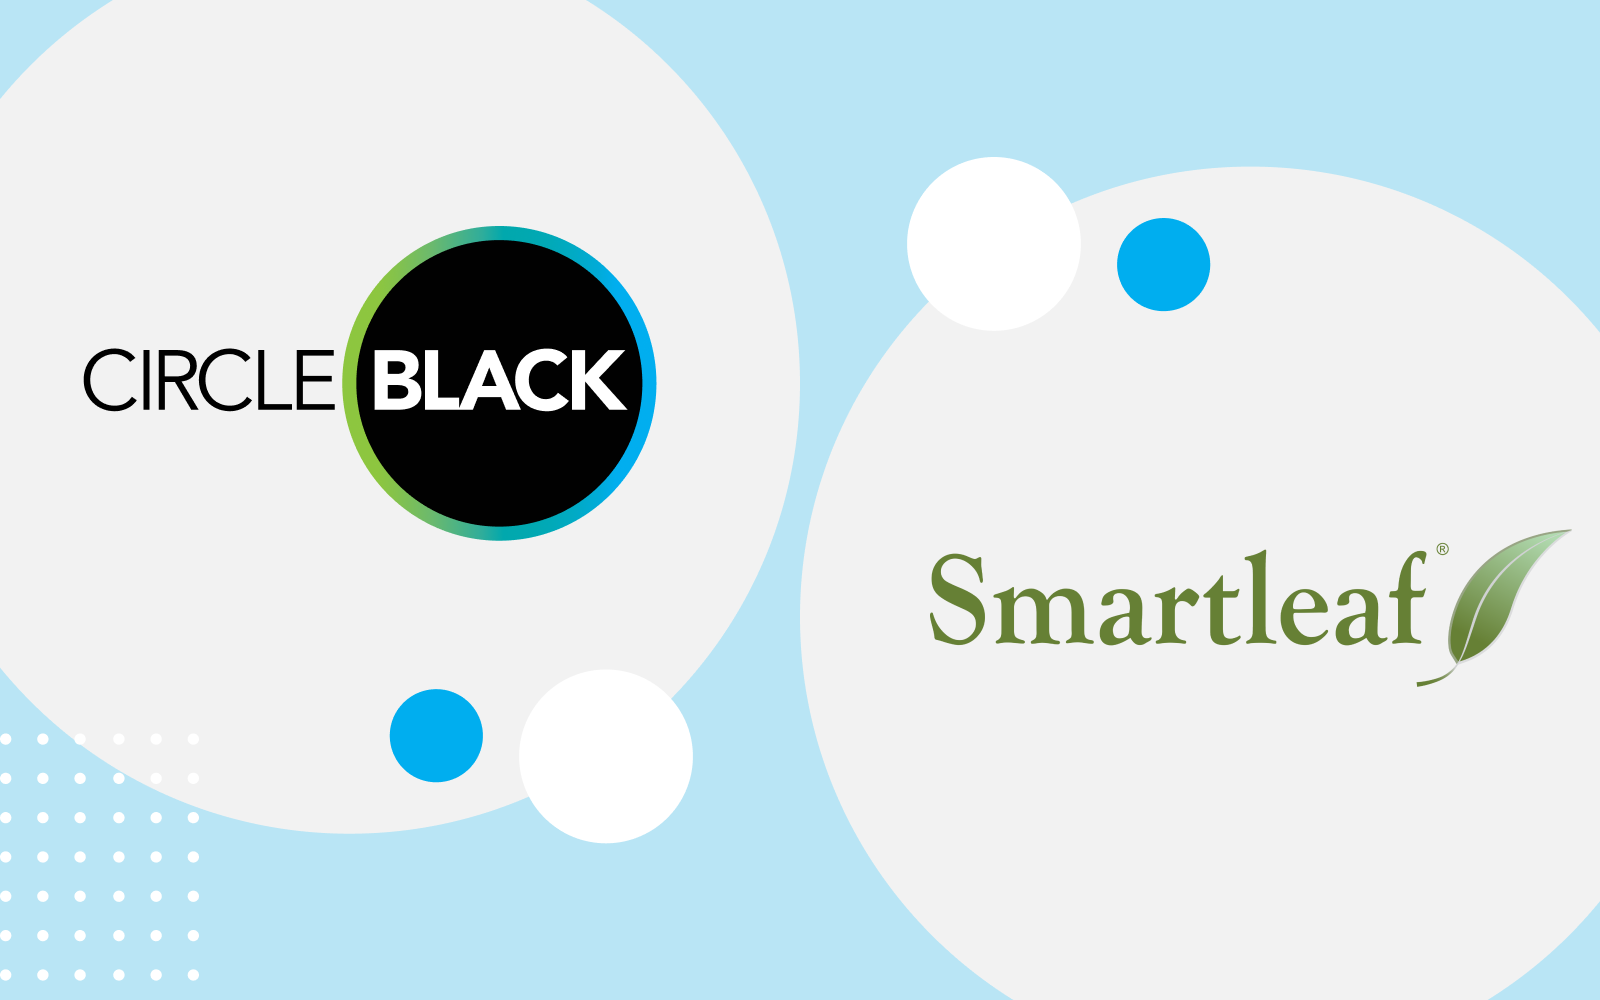 CircleBlack & Smartleaf logos